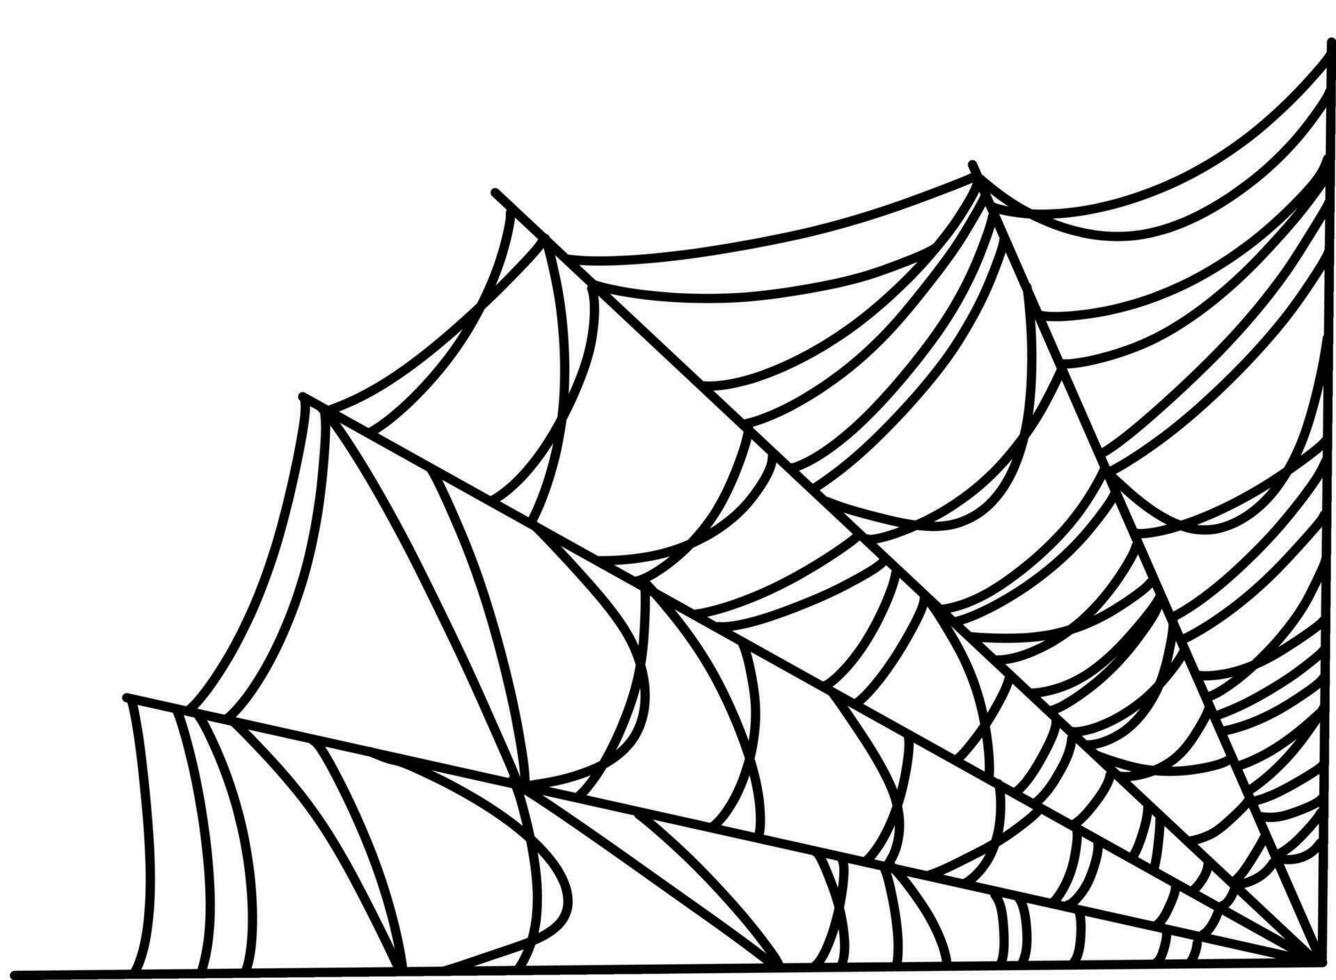 Spiderweb in doodle style vector